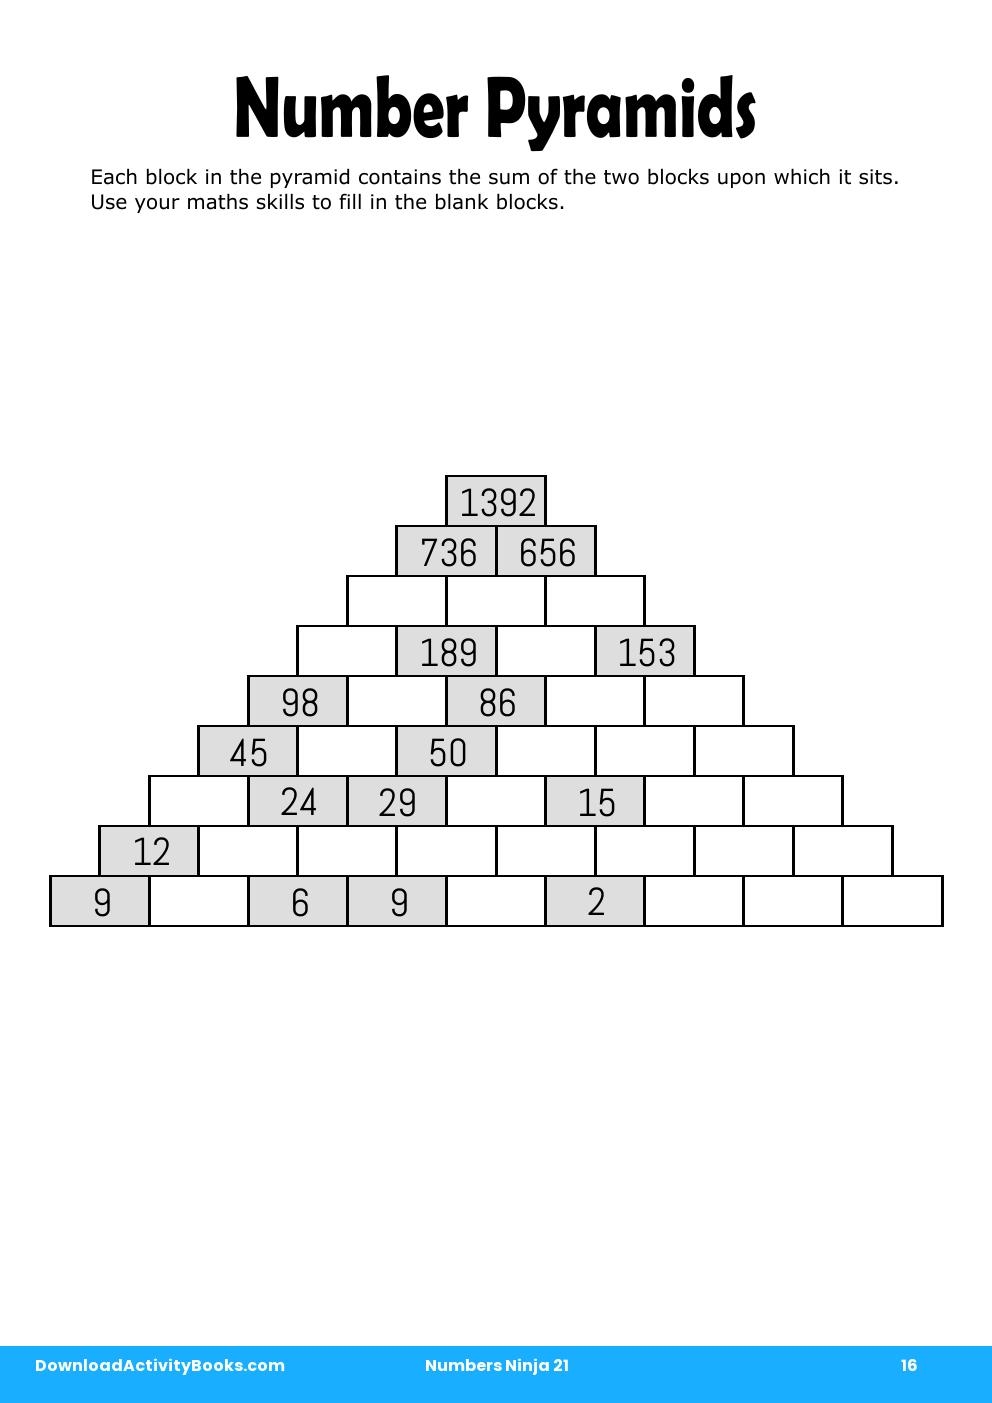 Number Pyramids in Numbers Ninja 21